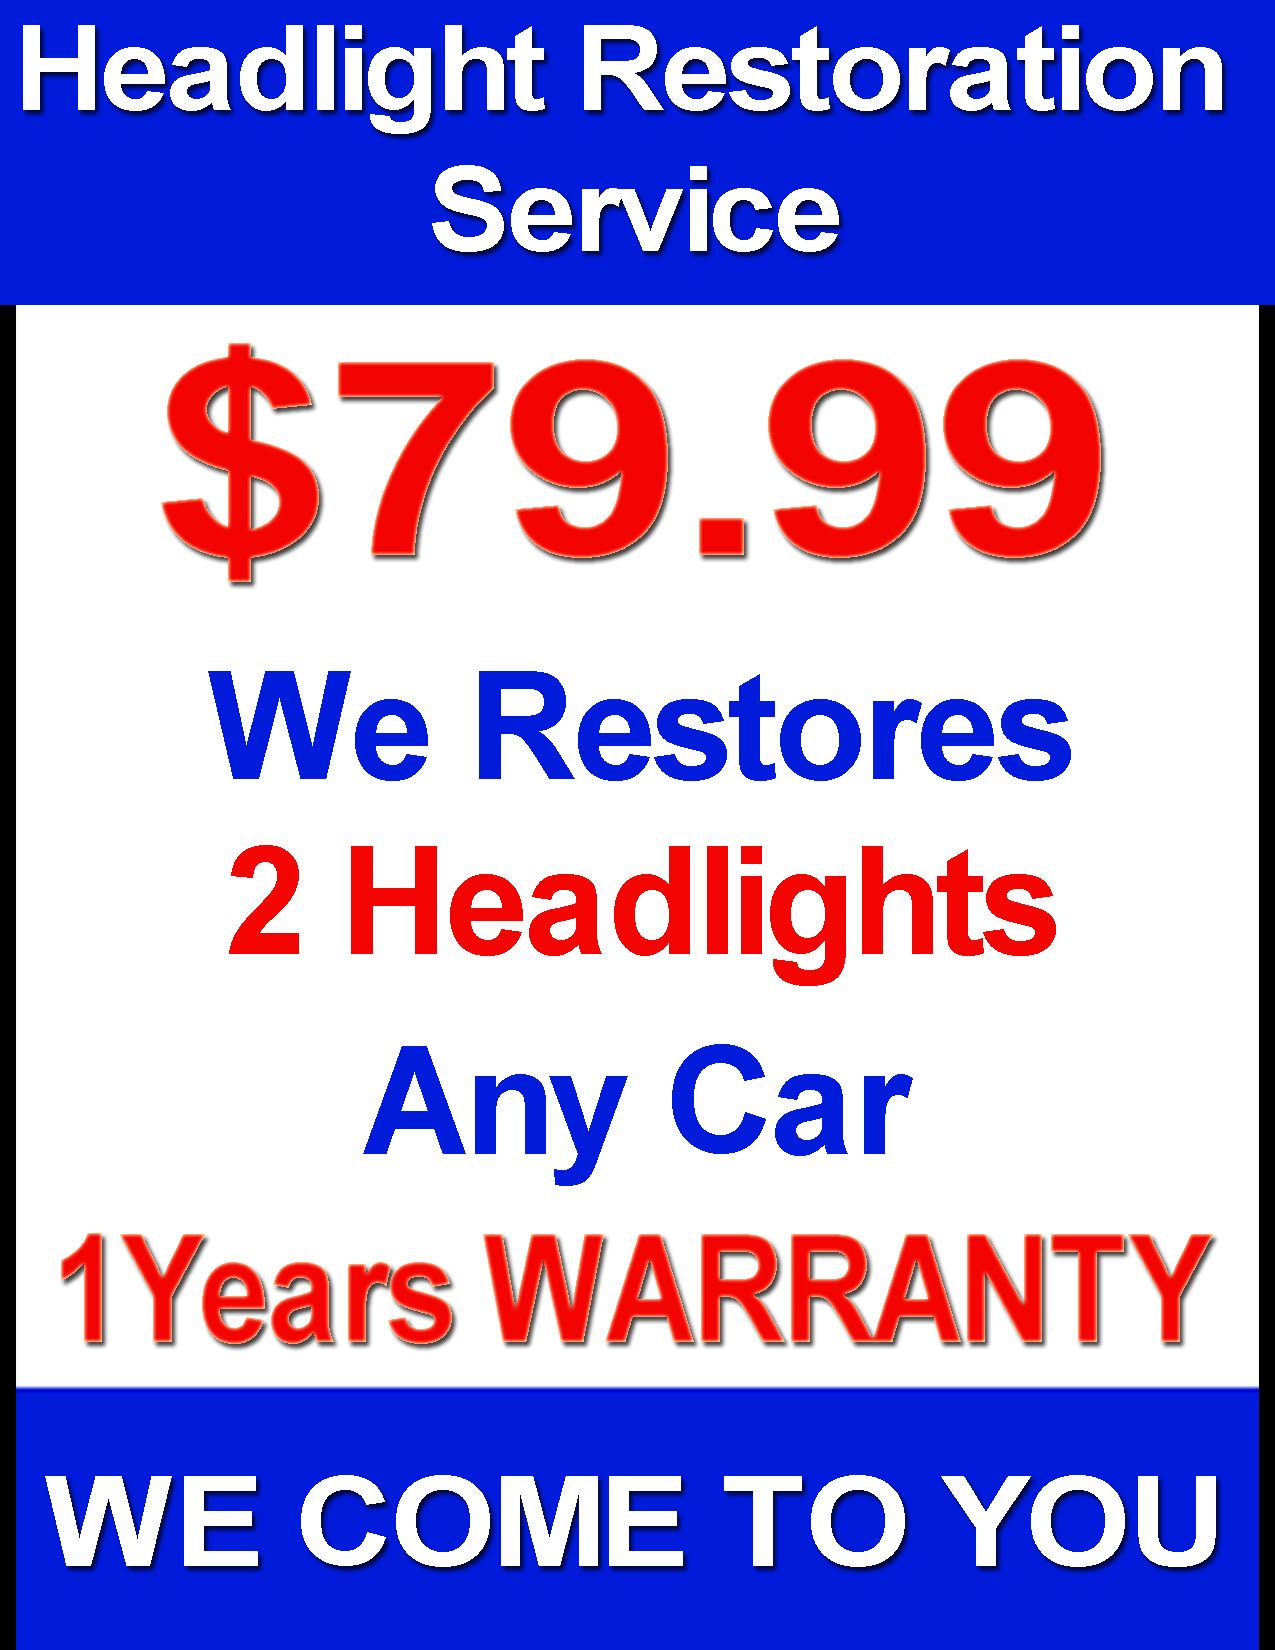 Headlight restoration service with 1 year warranty